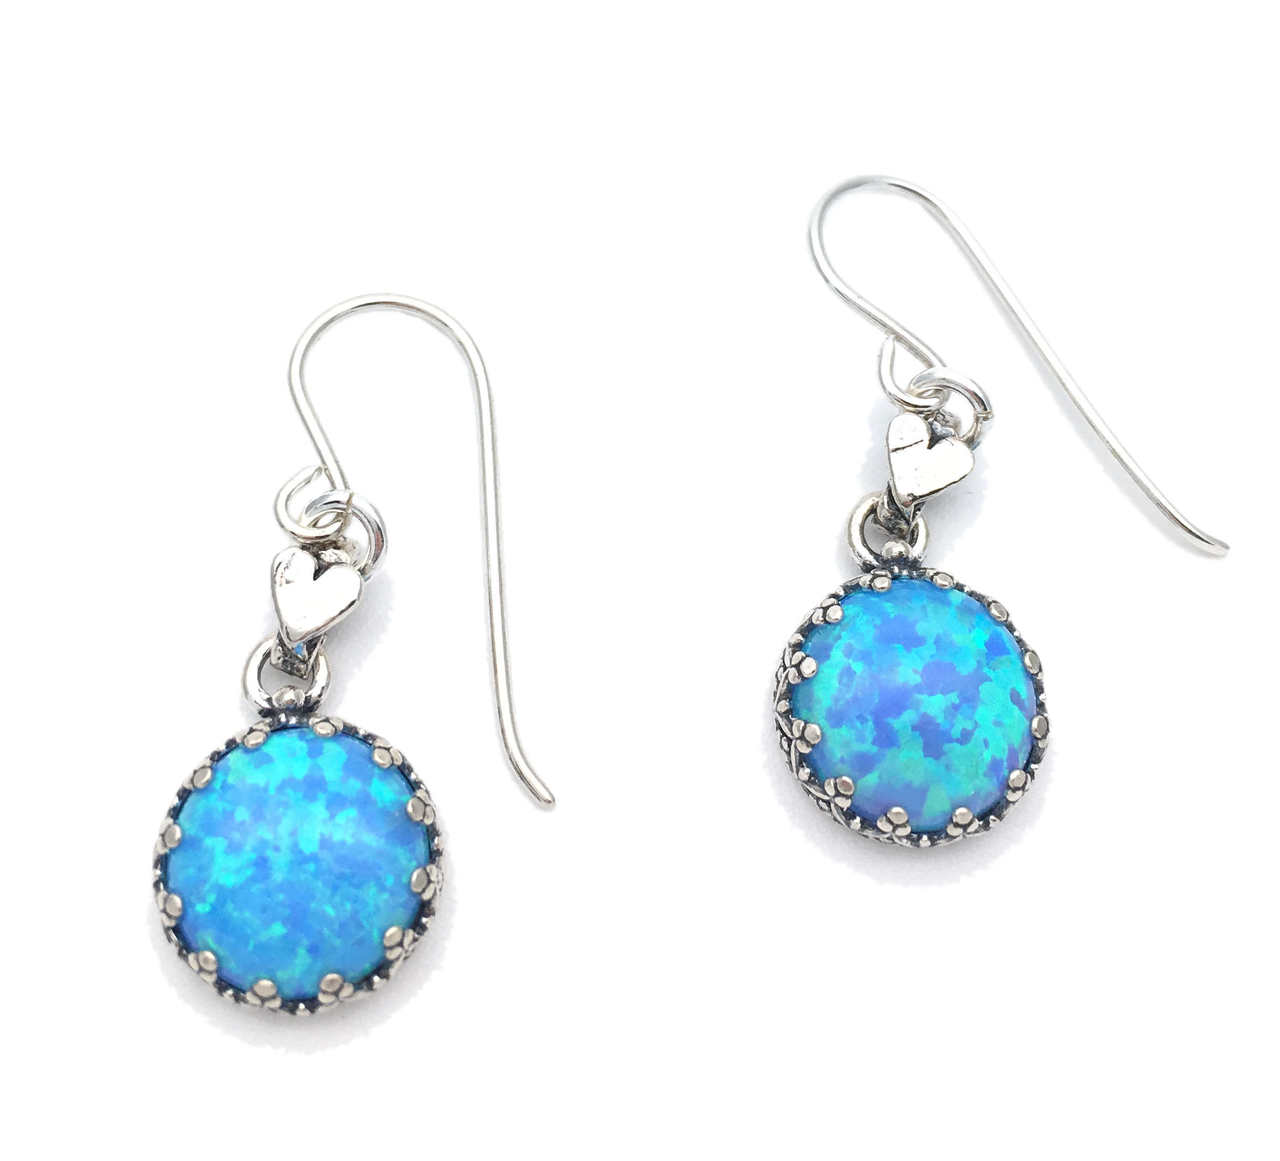 Round Opal Earrings - The Nancy Smillie Shop - Art, Jewellery & Designer Gifts Glasgow